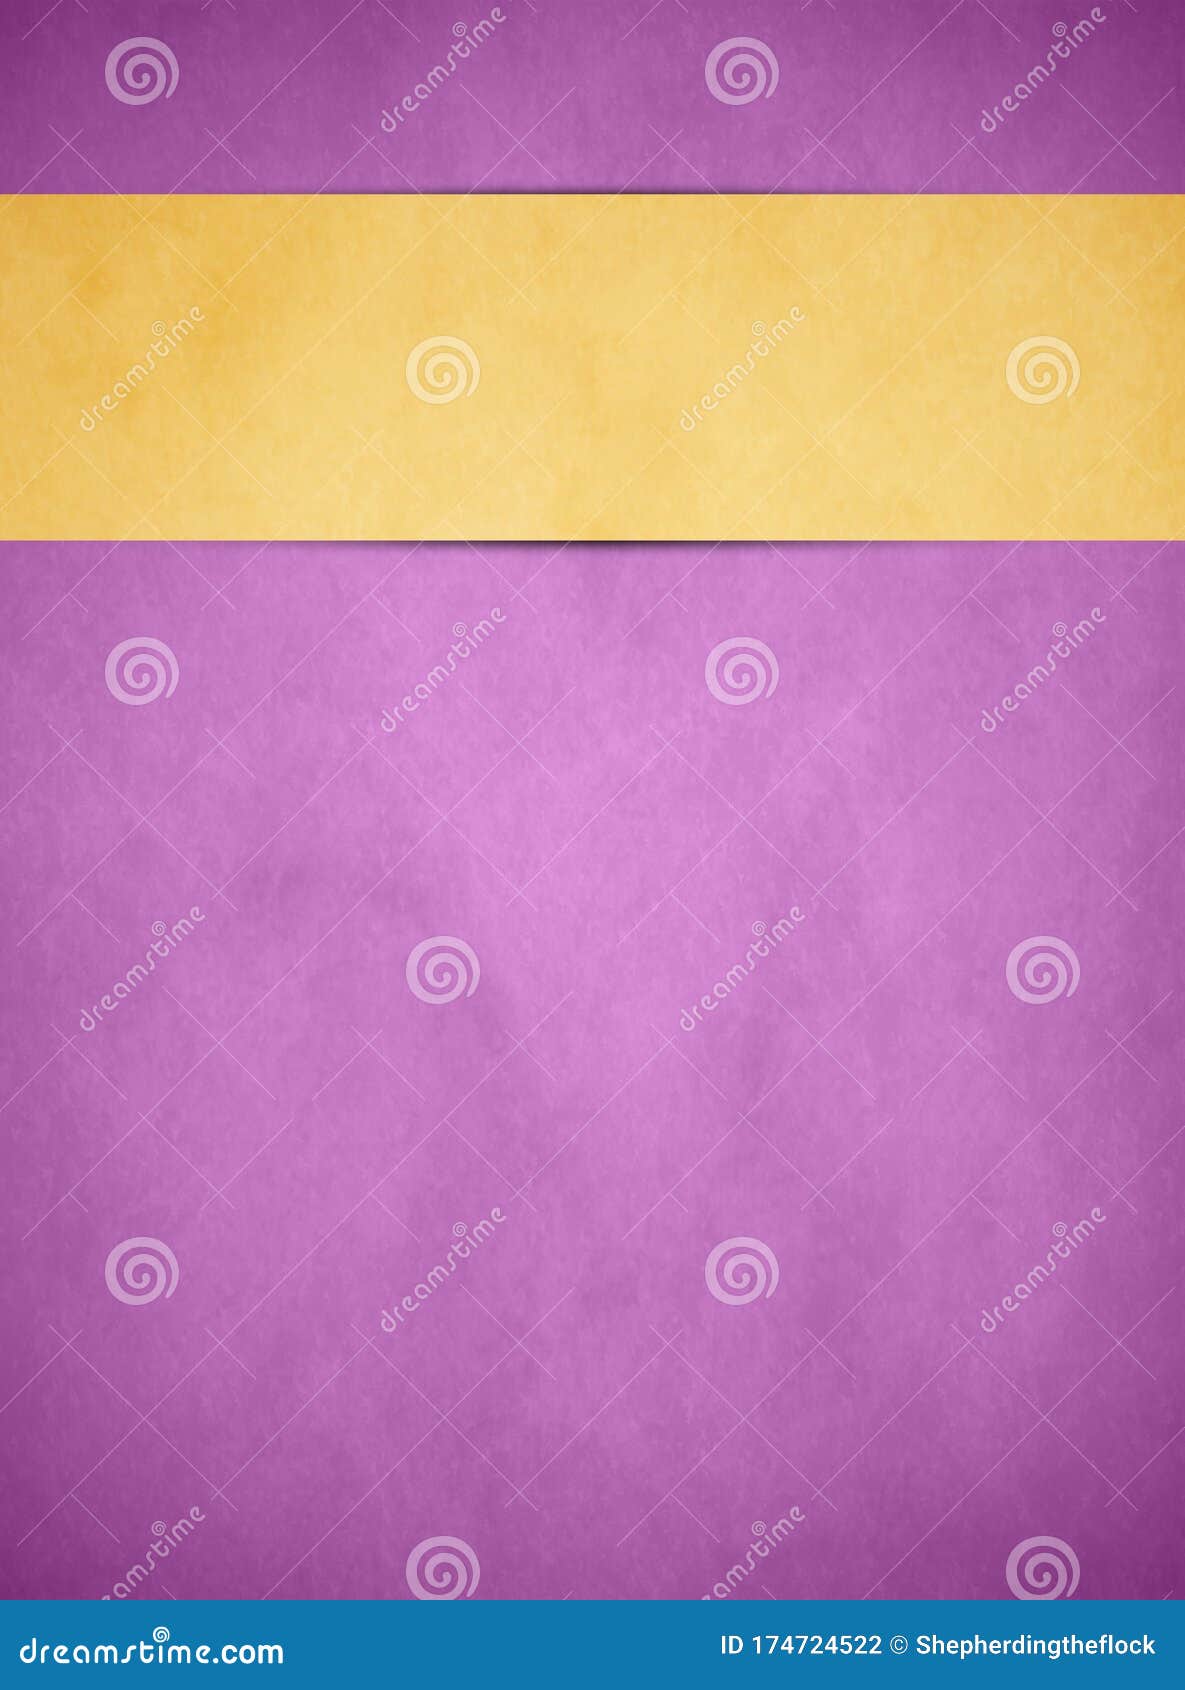 elegant light purple grunge background. tan gold banner. portrait orientation.